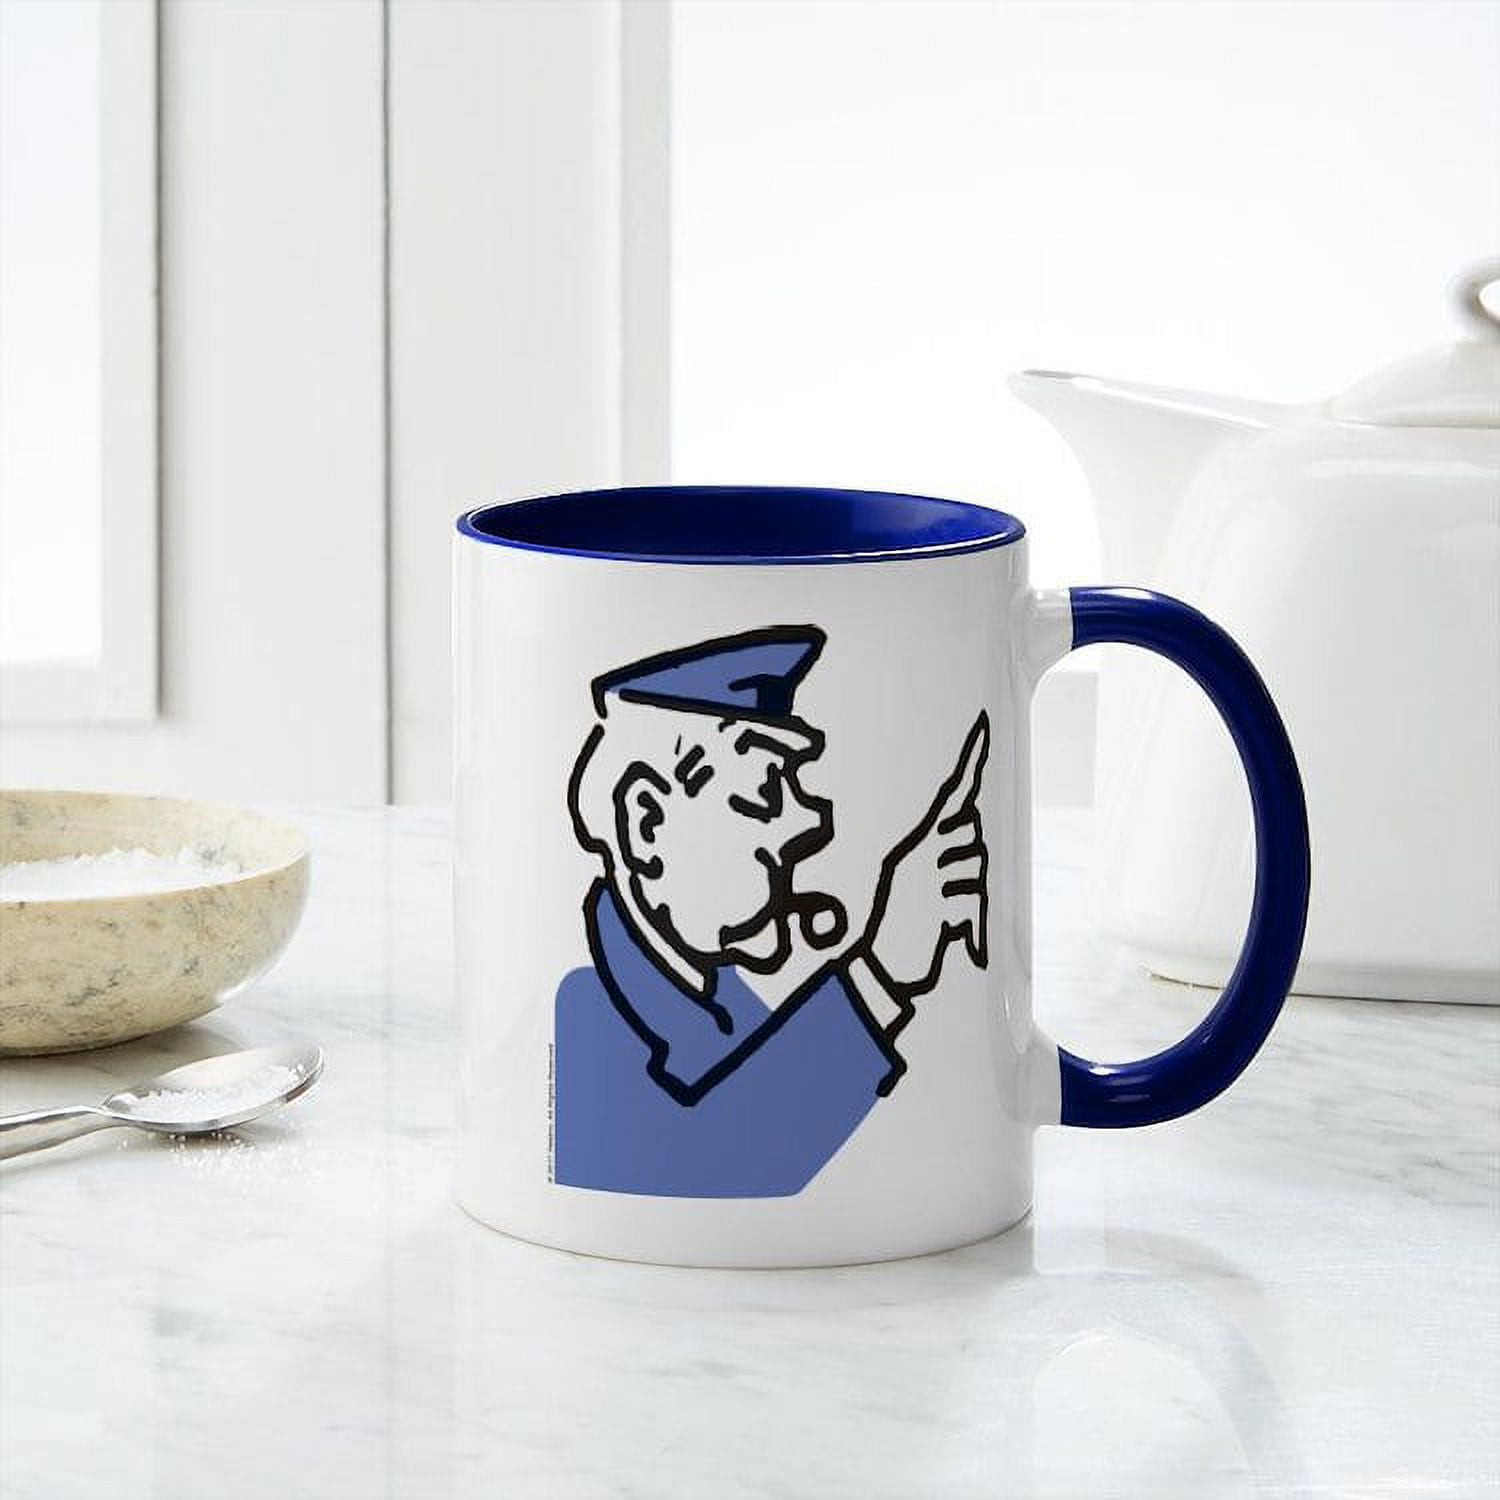 CafePress - Monopoly Cop - 11 oz Ceramic Mug - Novelty Coffee